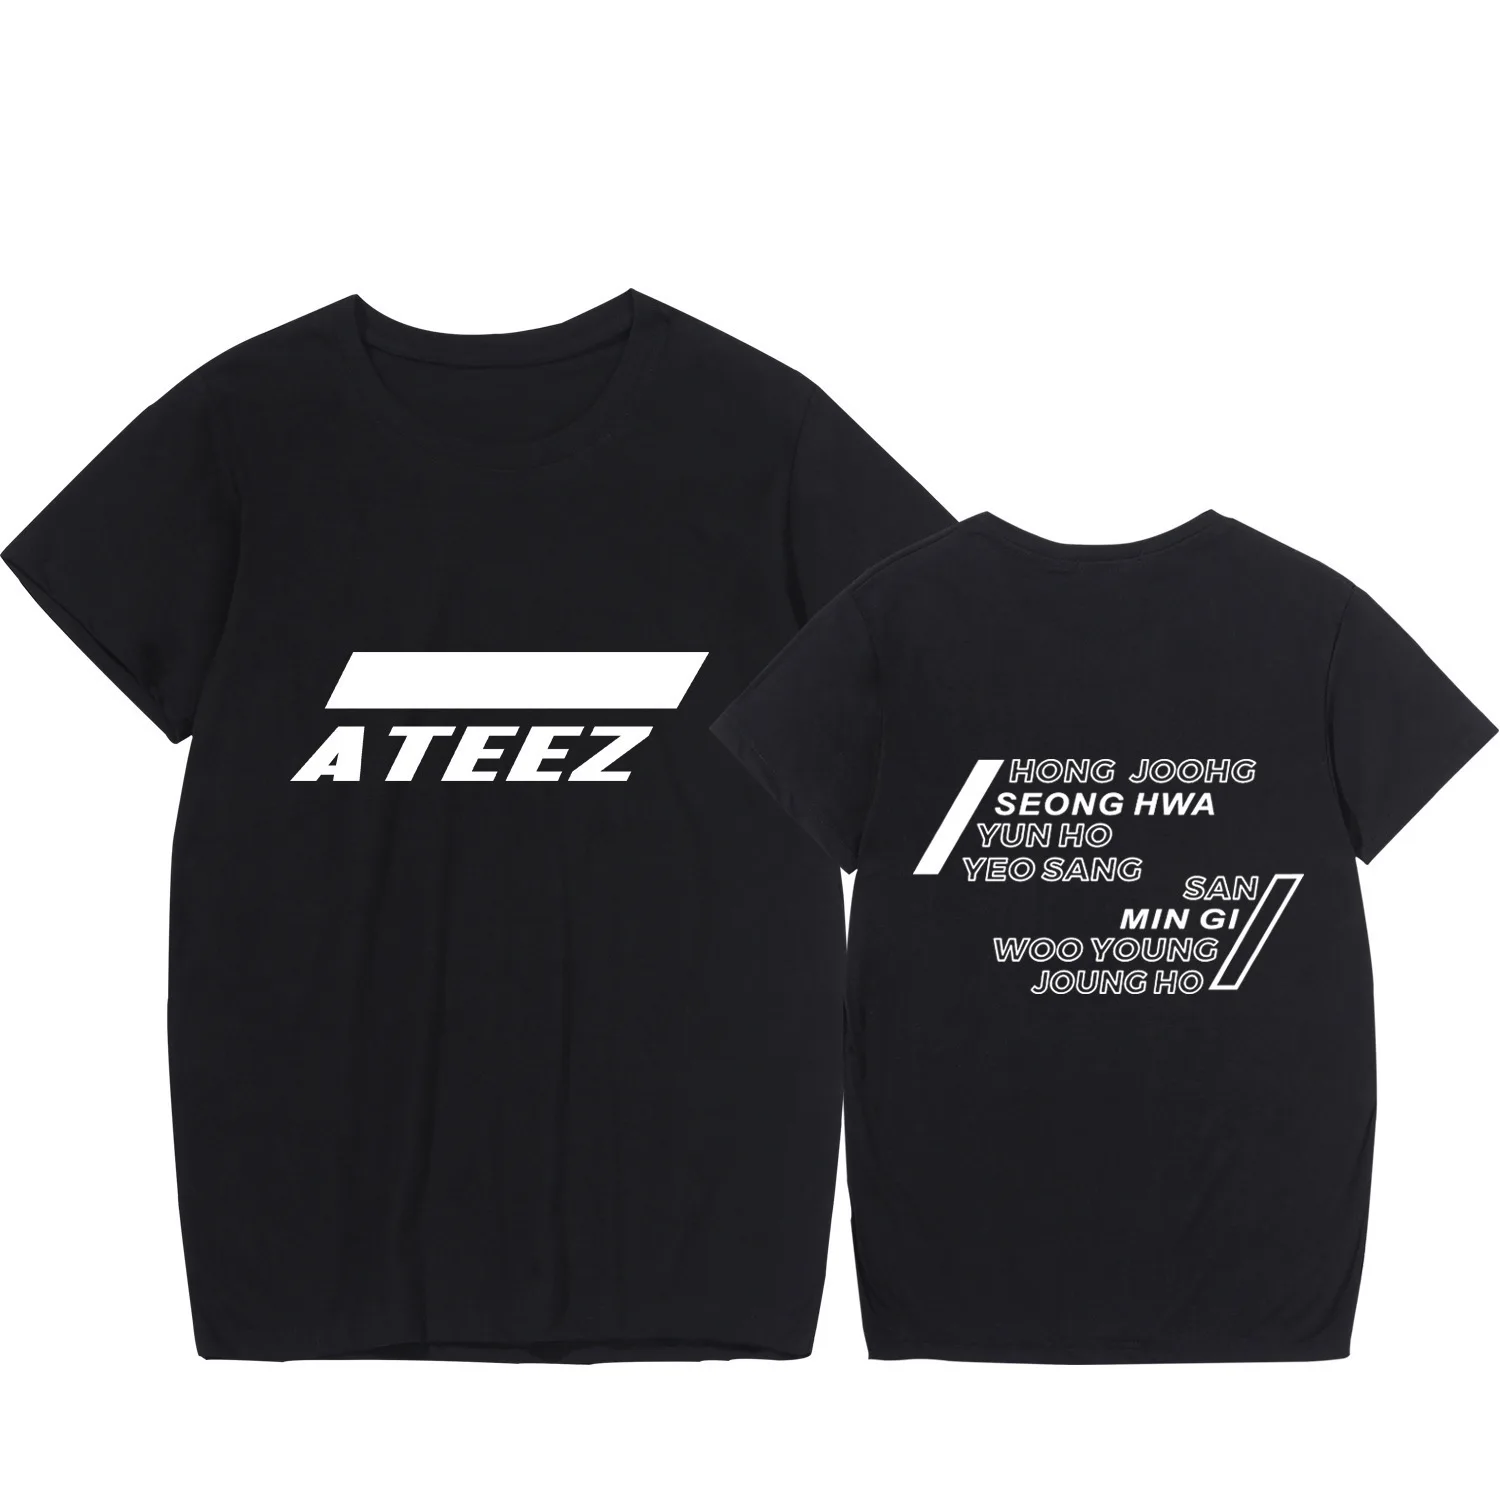 2019 Nyt Mønster Ateez T-shirt Korea Hot Kombinere Mode t-shirt Kort Ærme Skam Fabrik harajuku